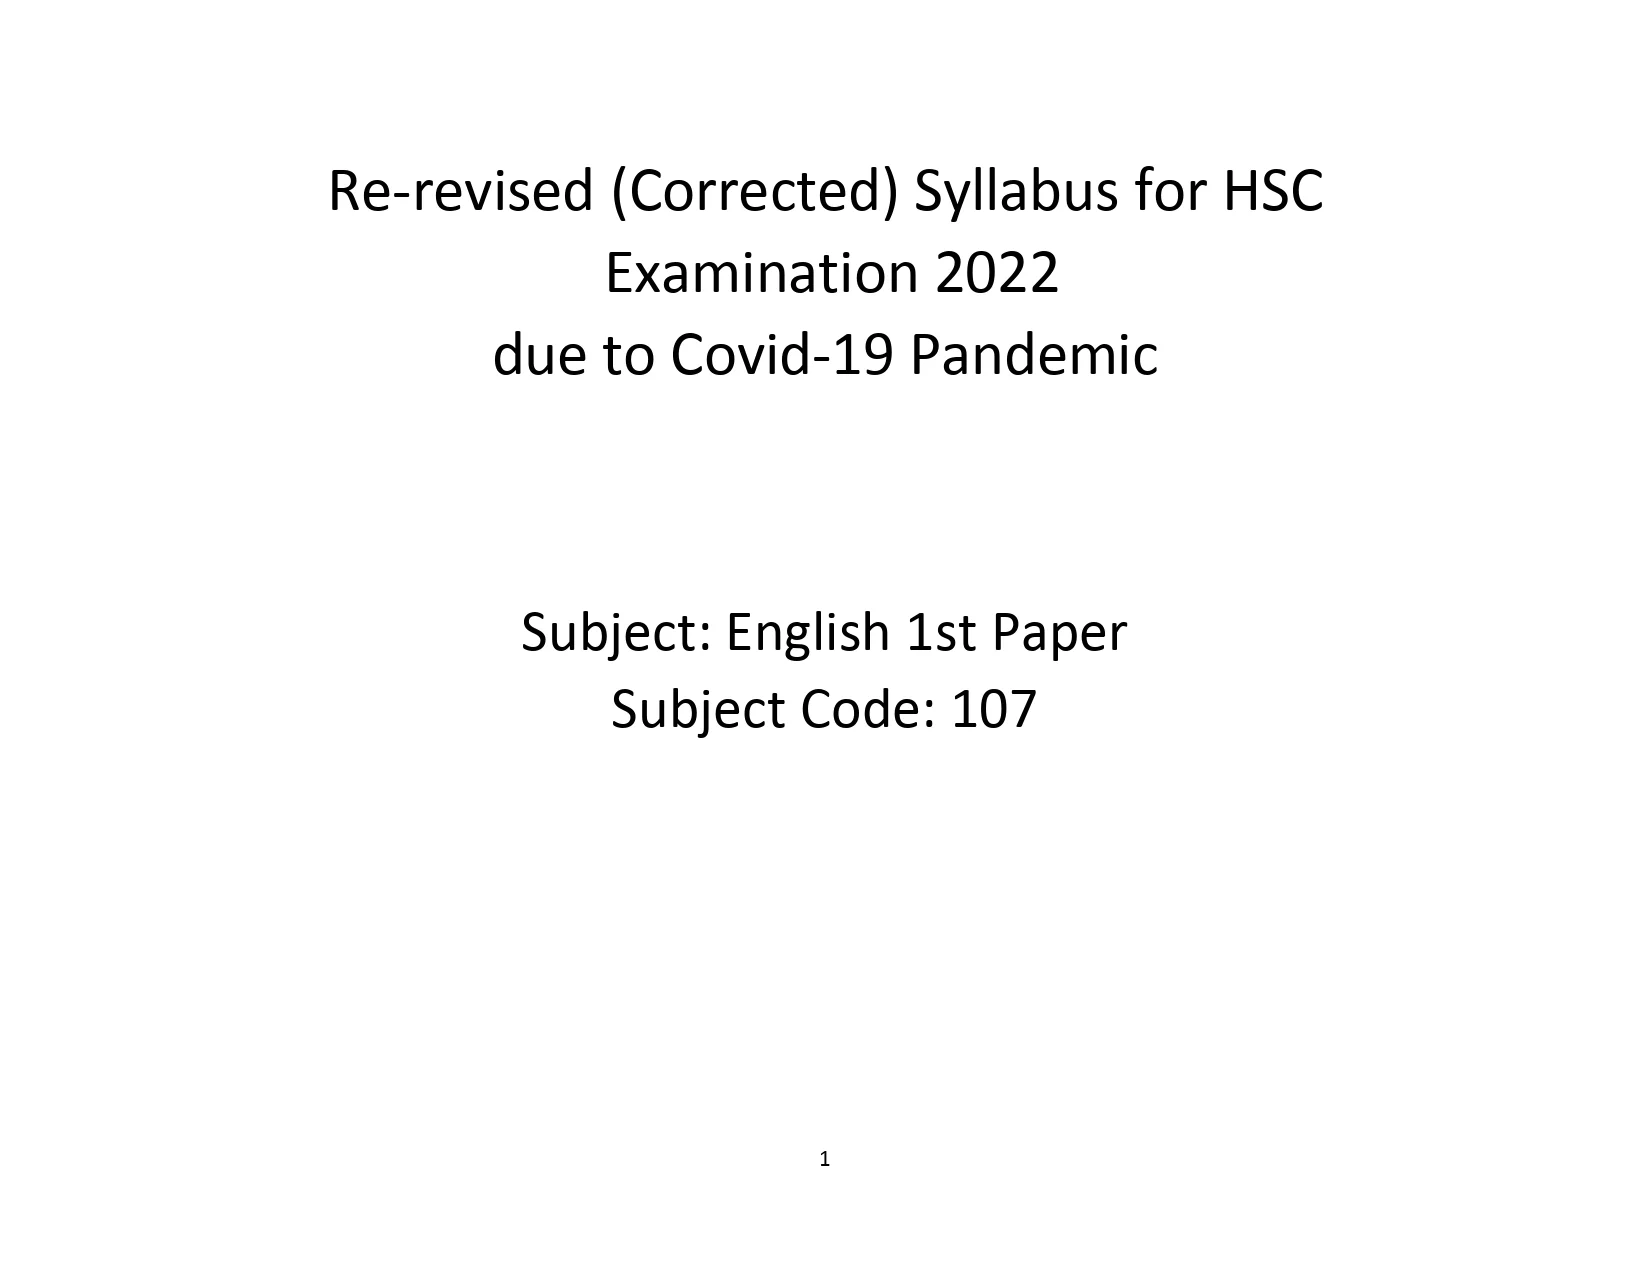 English 1st Paper - HSC Short Syllabus 2022